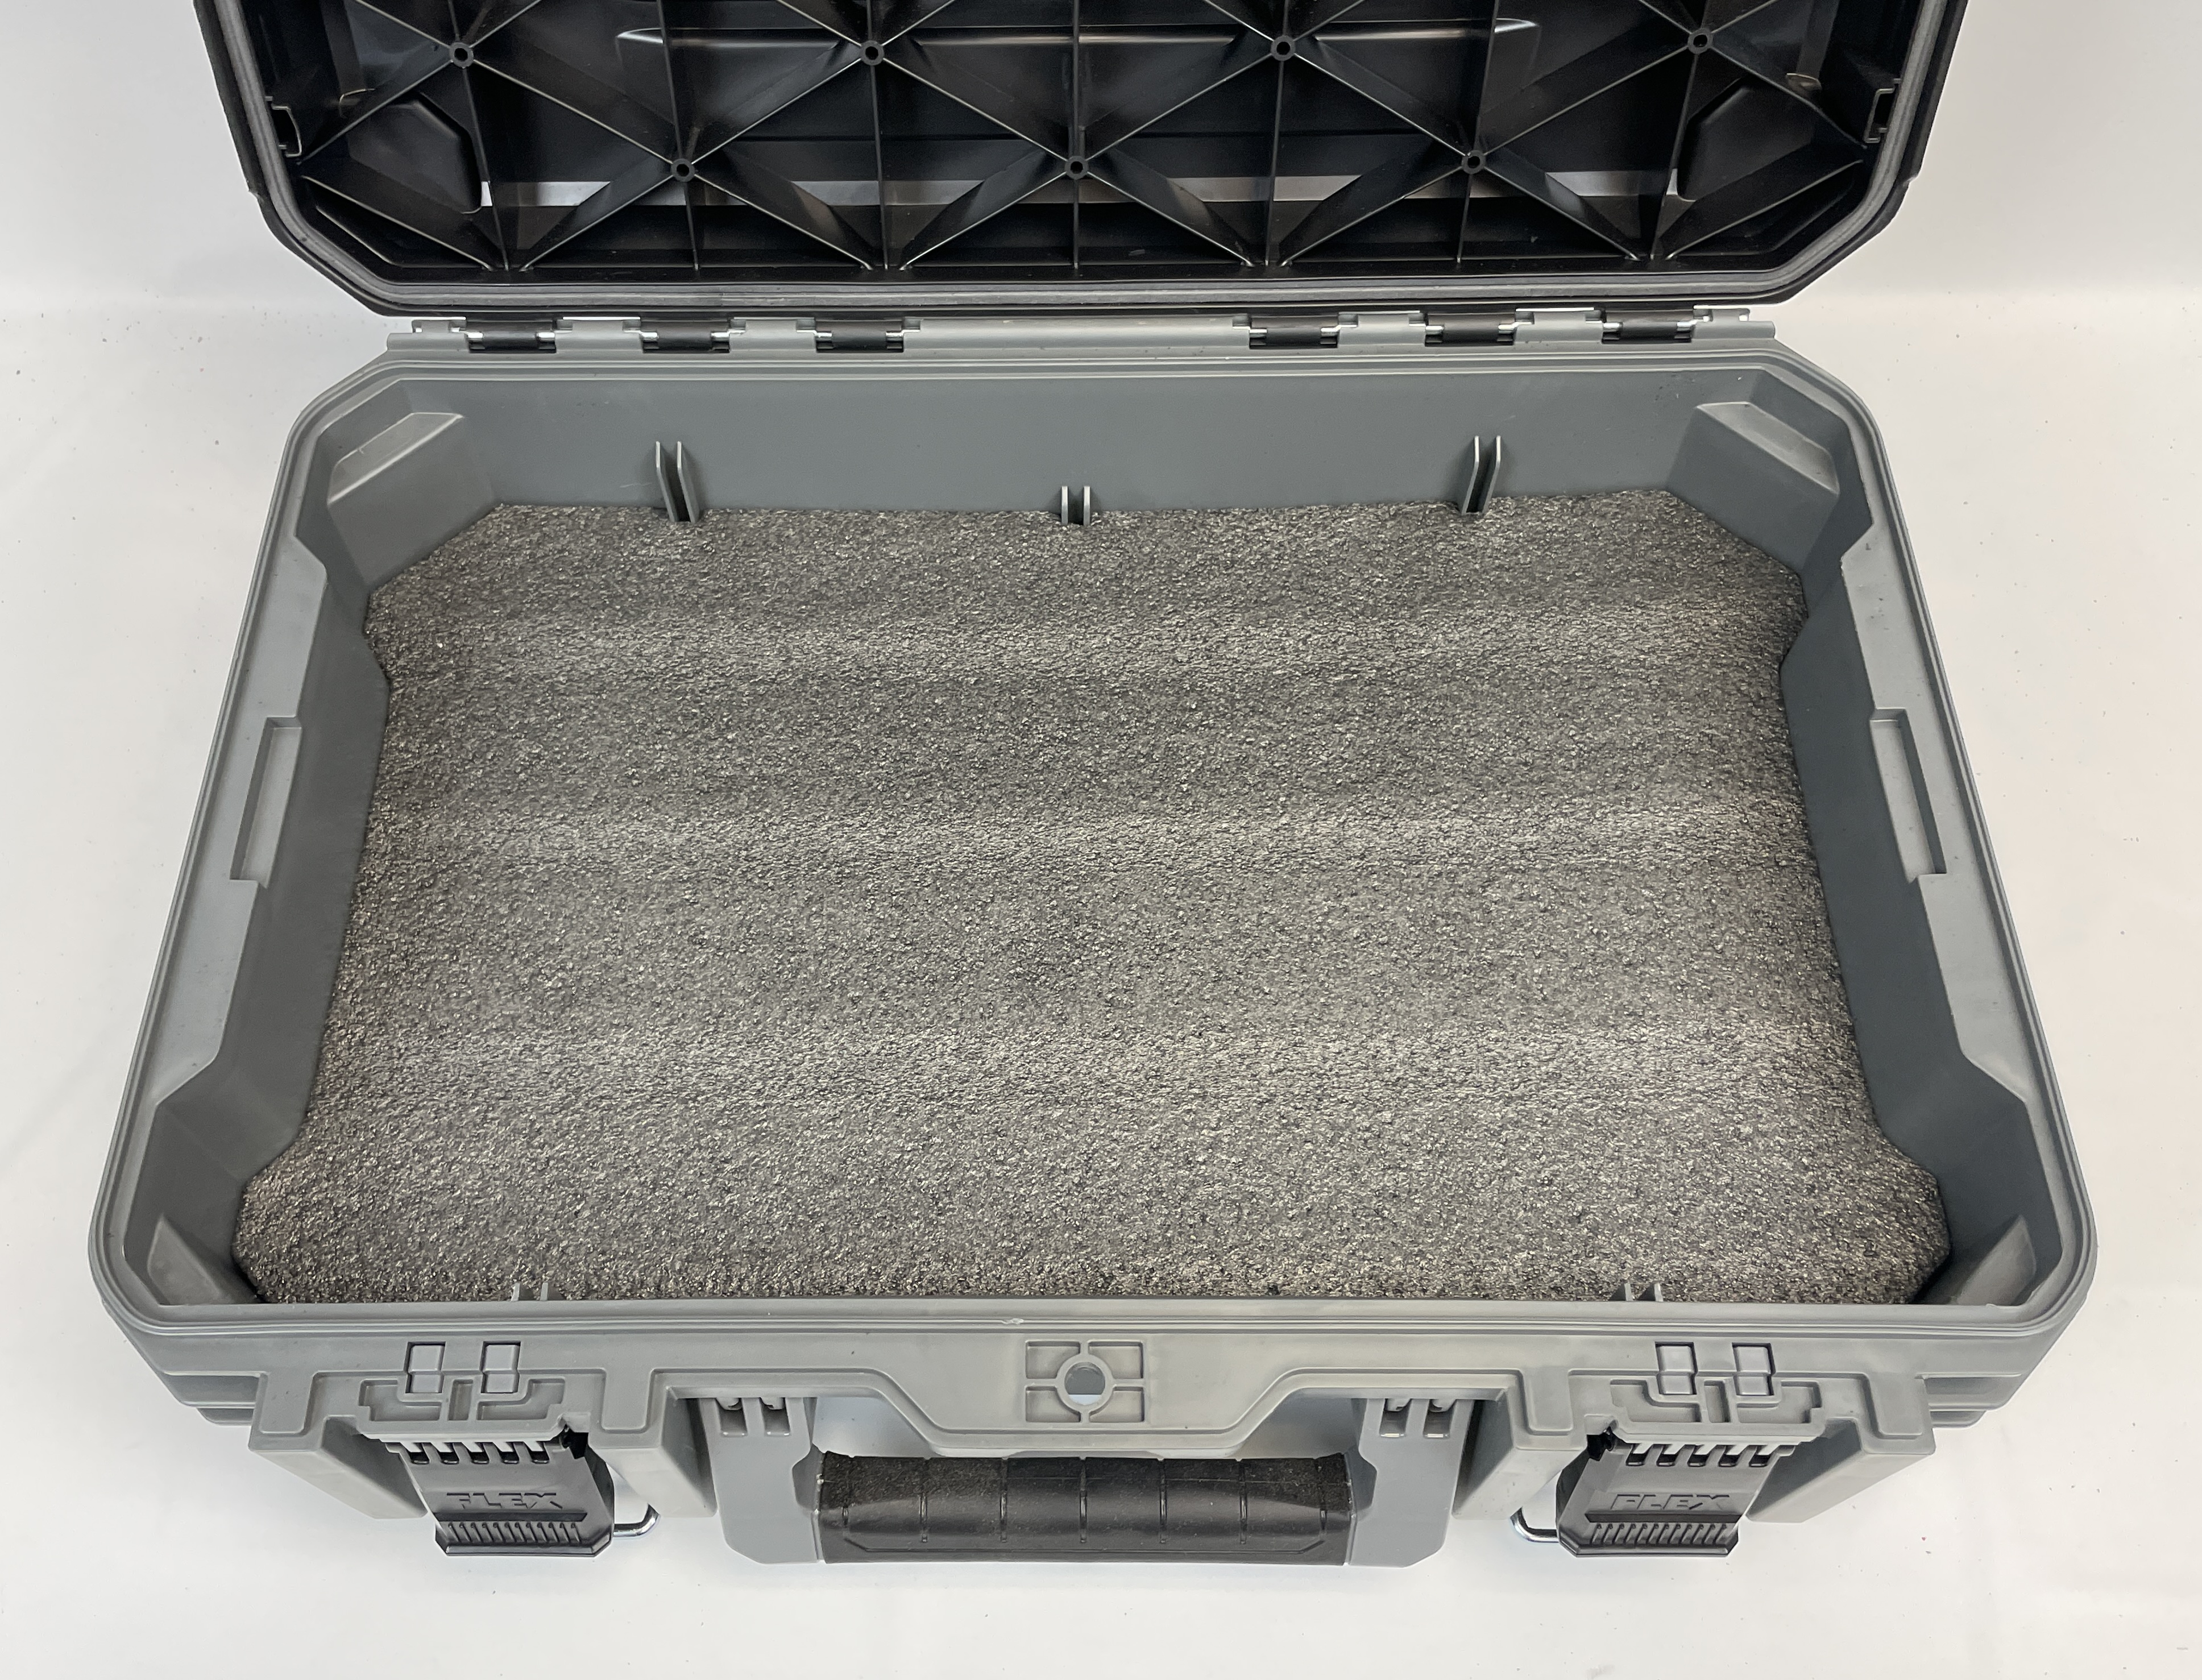 Kaizen Source - FLEX STACK PACK Suitcase Tool Box - Kaizen Foam